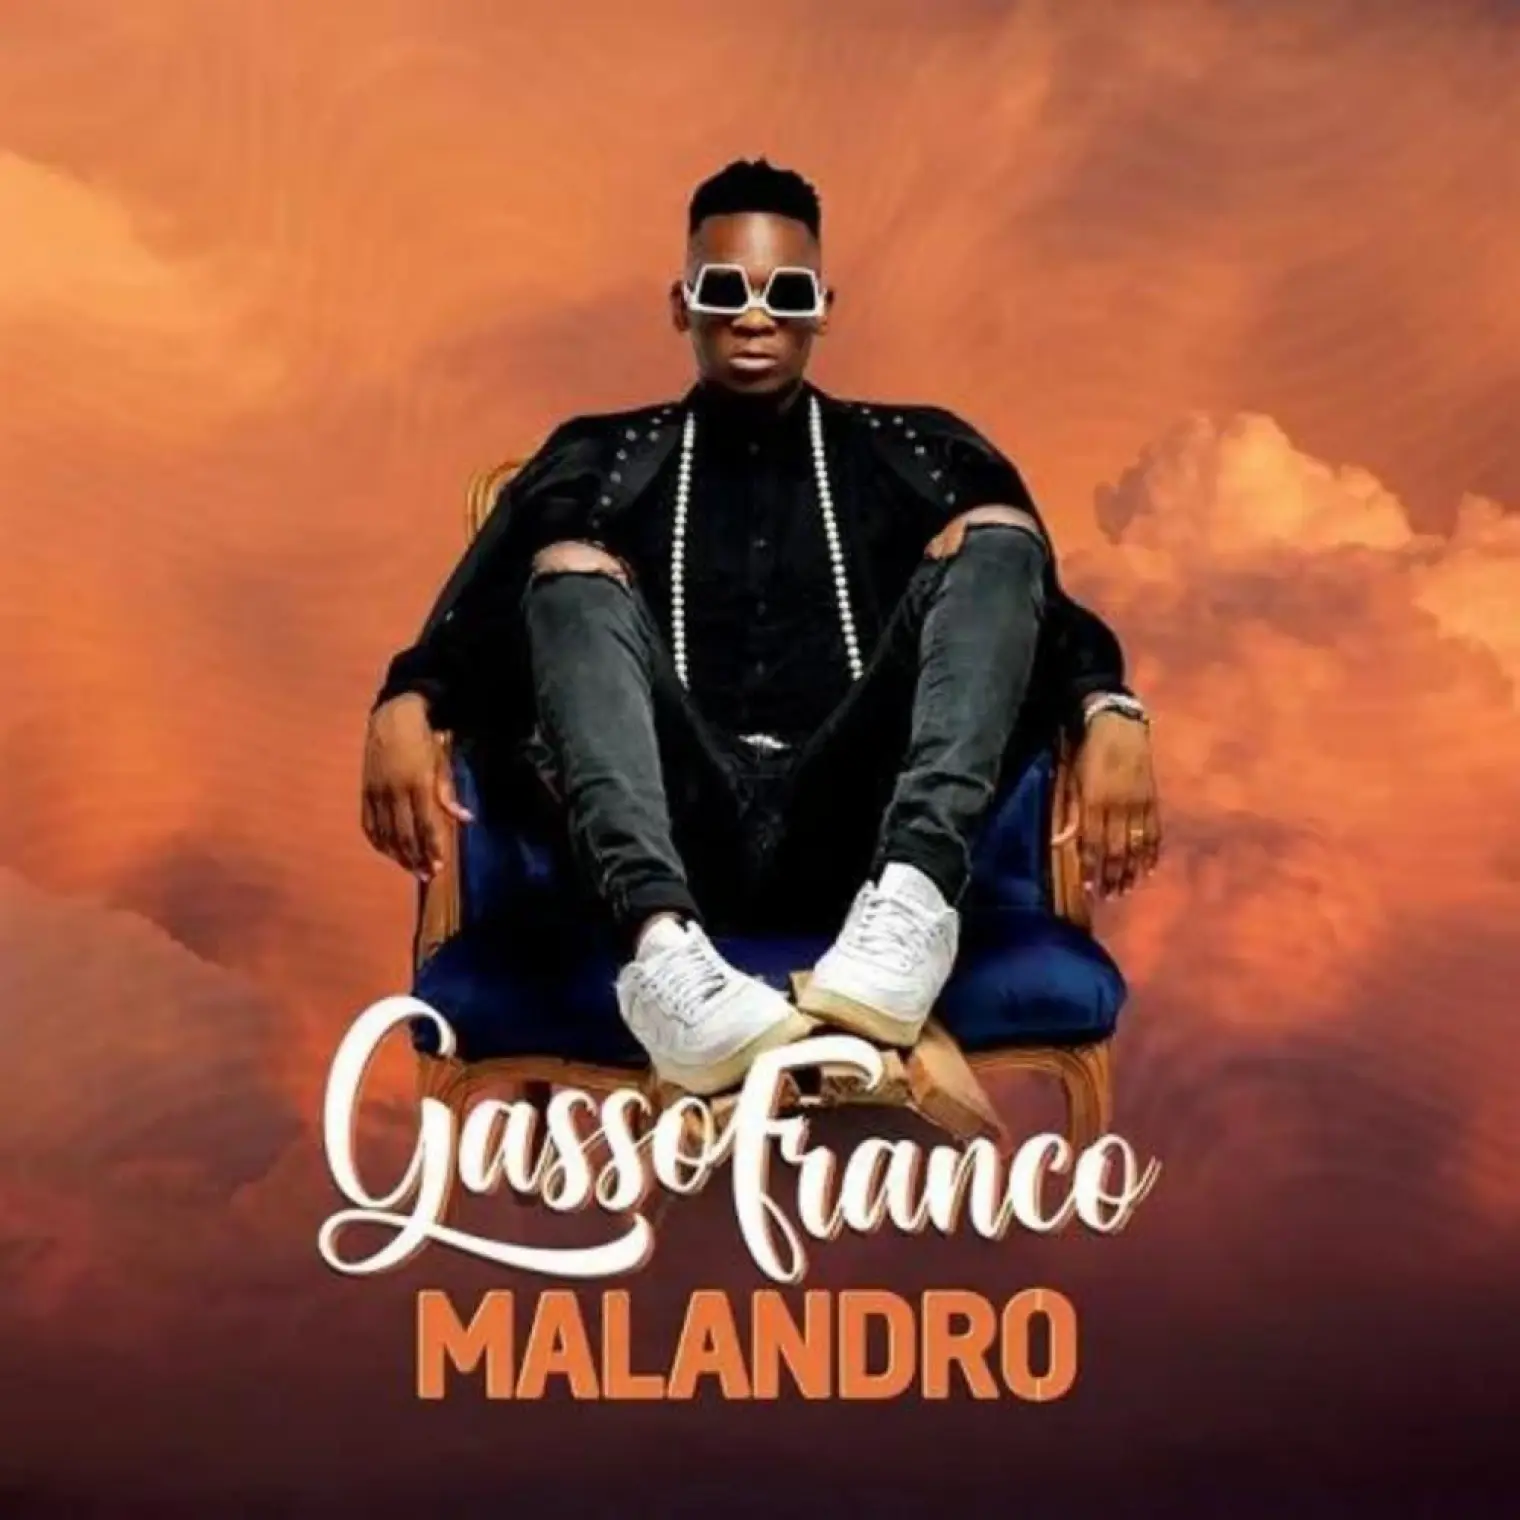 Malandro -  Gasso Franco 